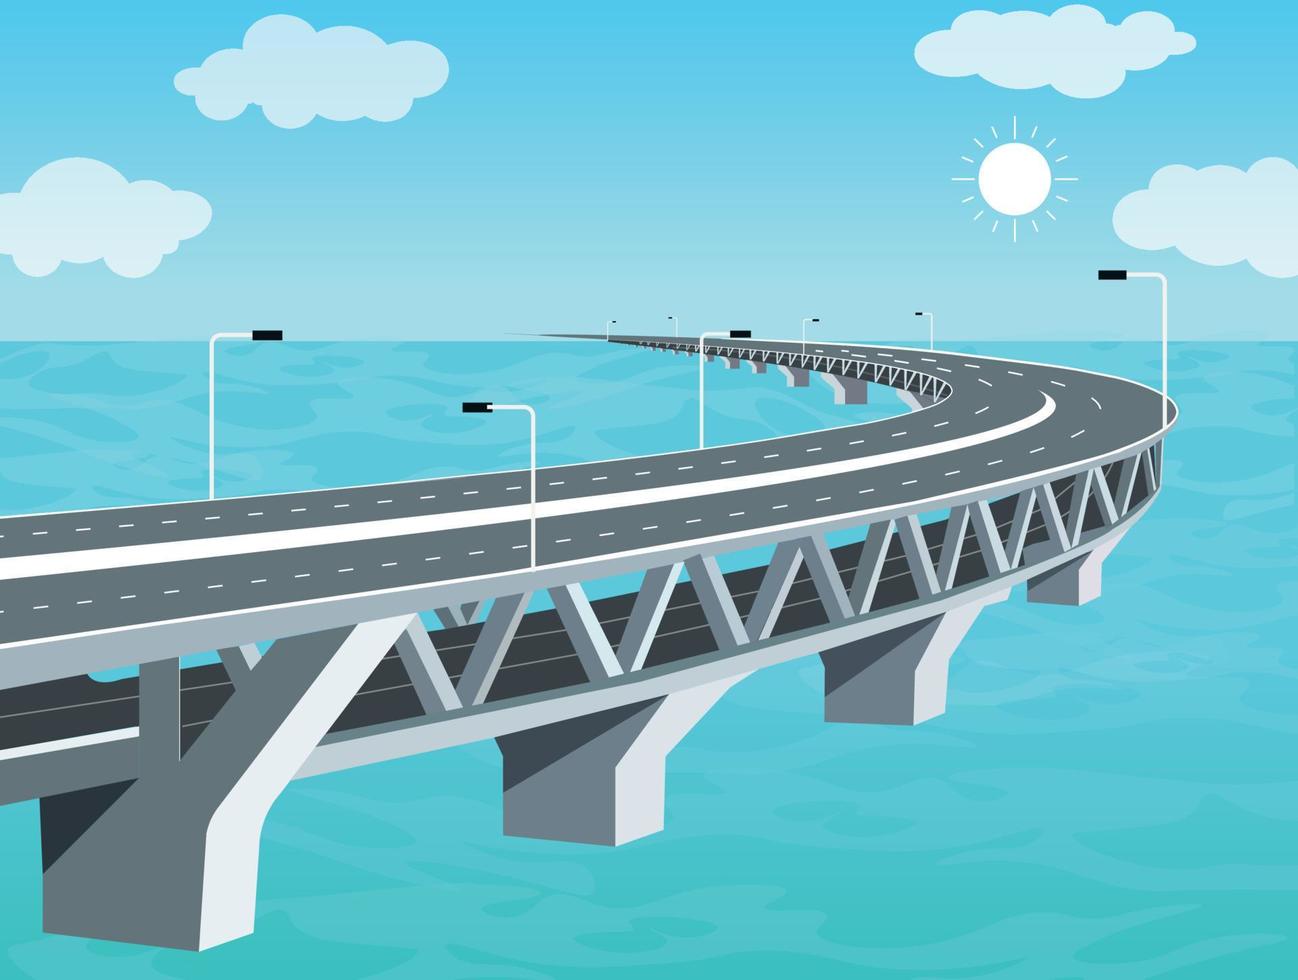 illustration du pont padma du bangladesh vecteur